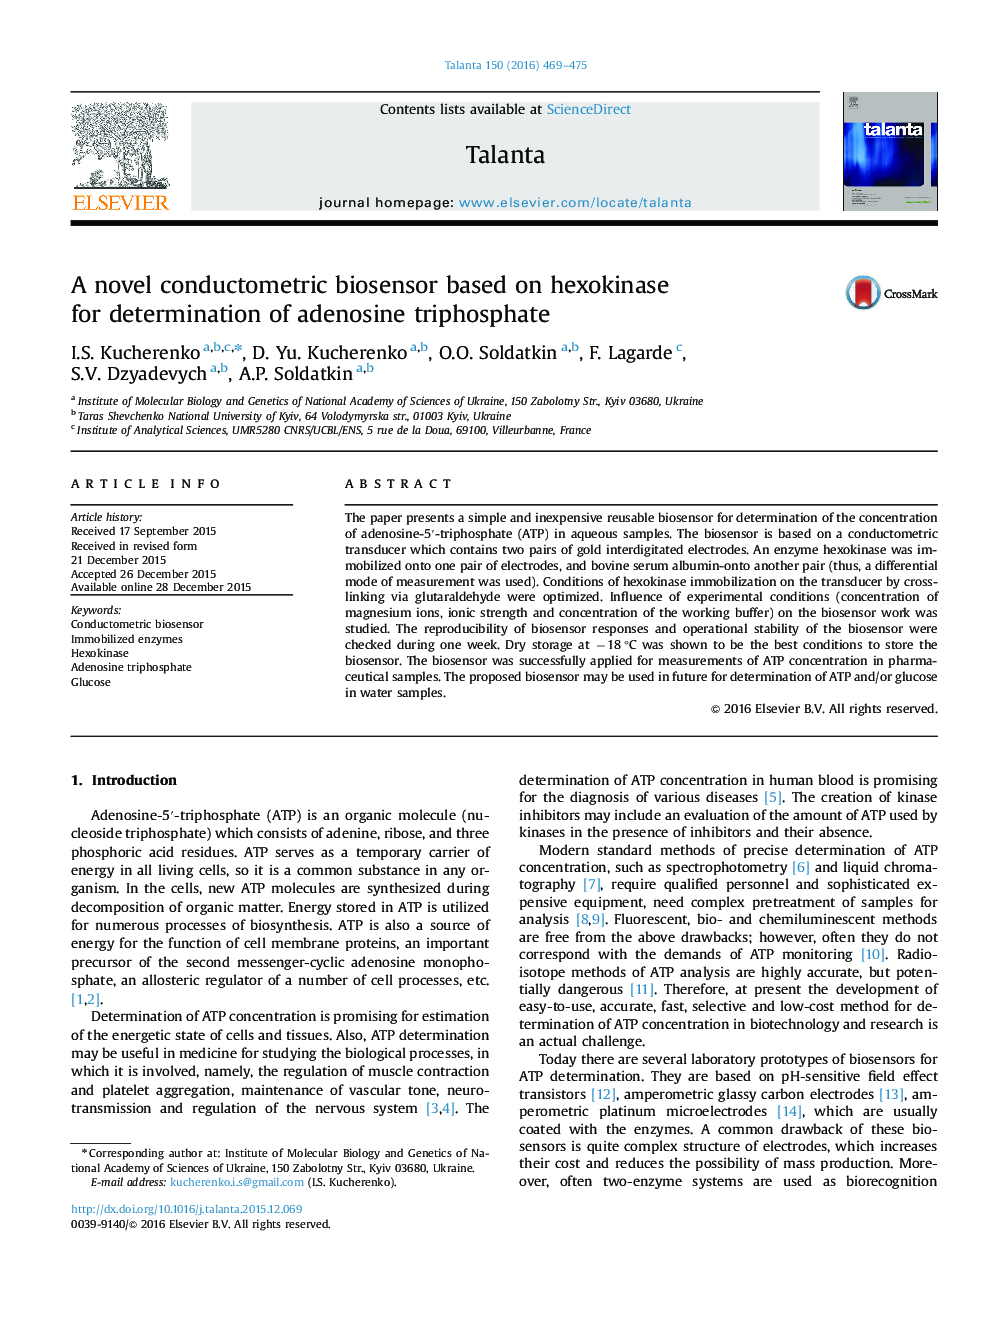 A novel conductometric biosensor based on hexokinase for determination of adenosine triphosphate